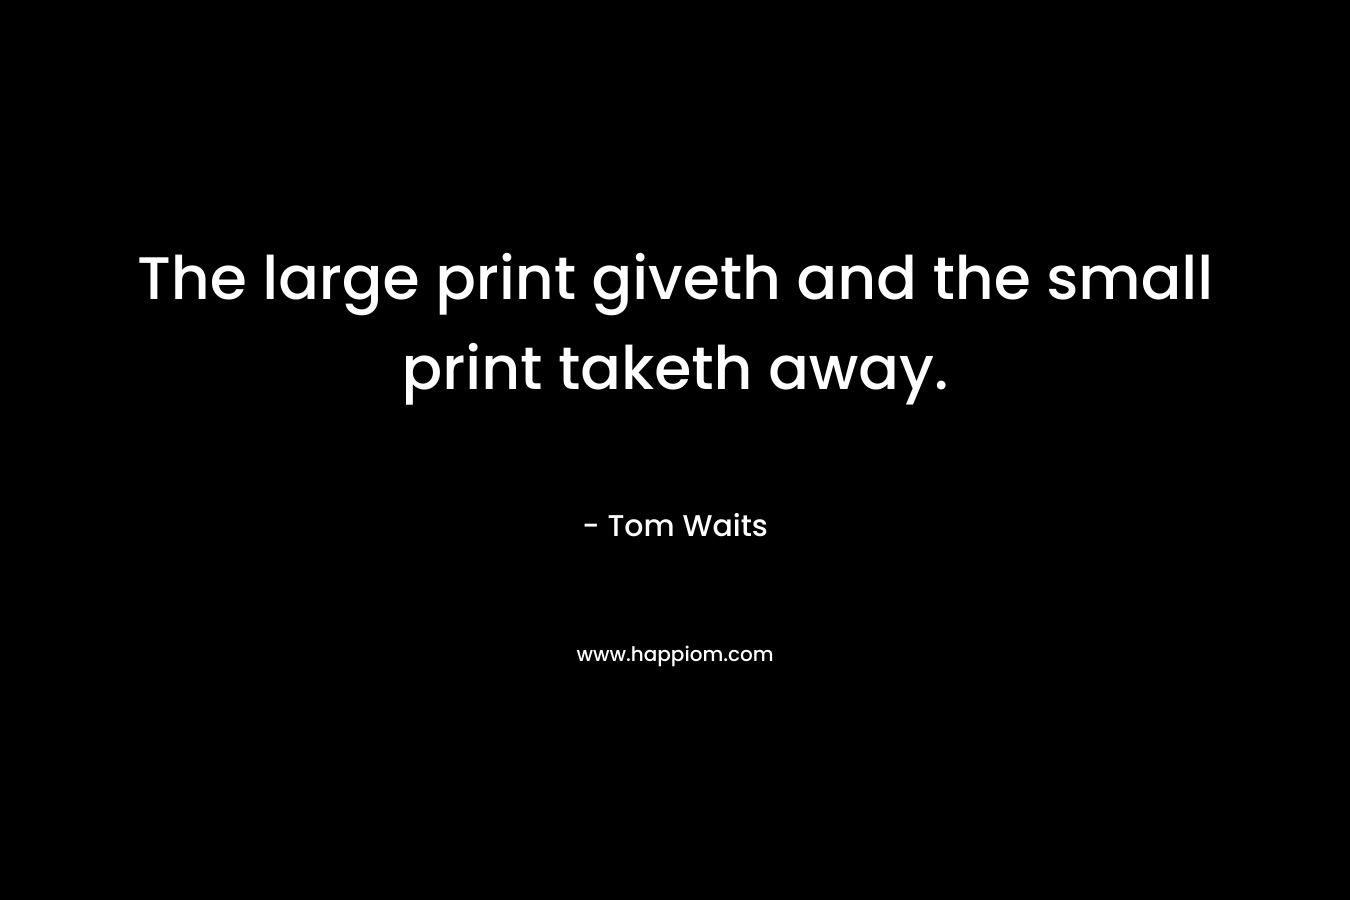 The large print giveth and the small print taketh away. – Tom Waits